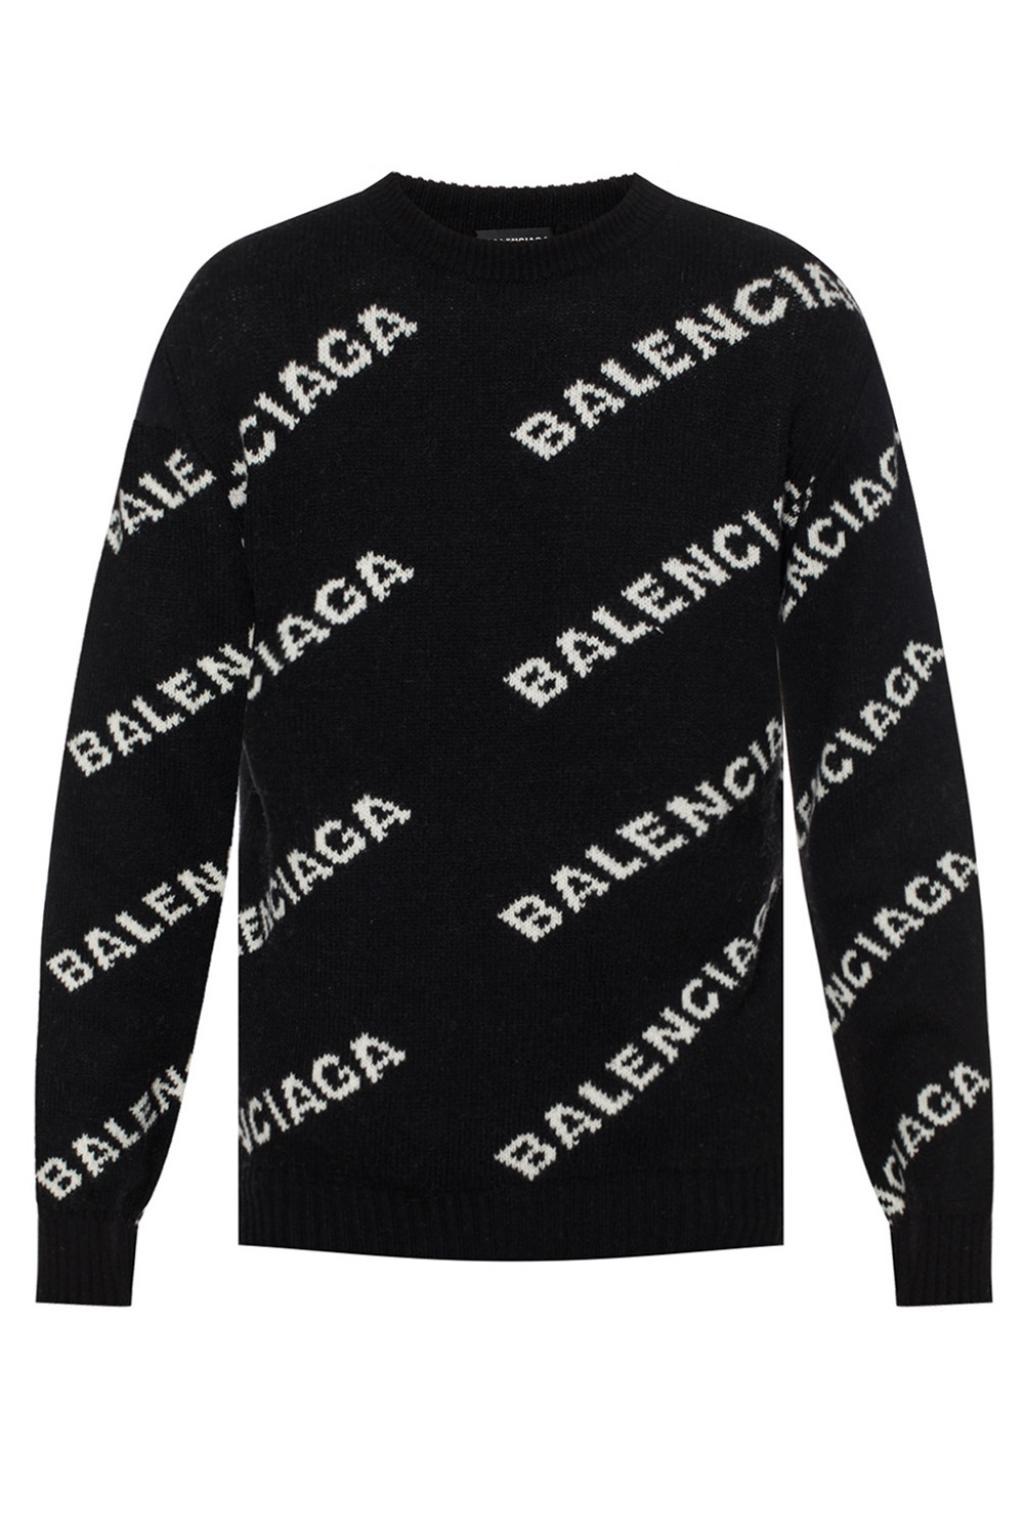 Balenciaga Wool Black And White Jacquard Logo Crewneck Sweater for Men